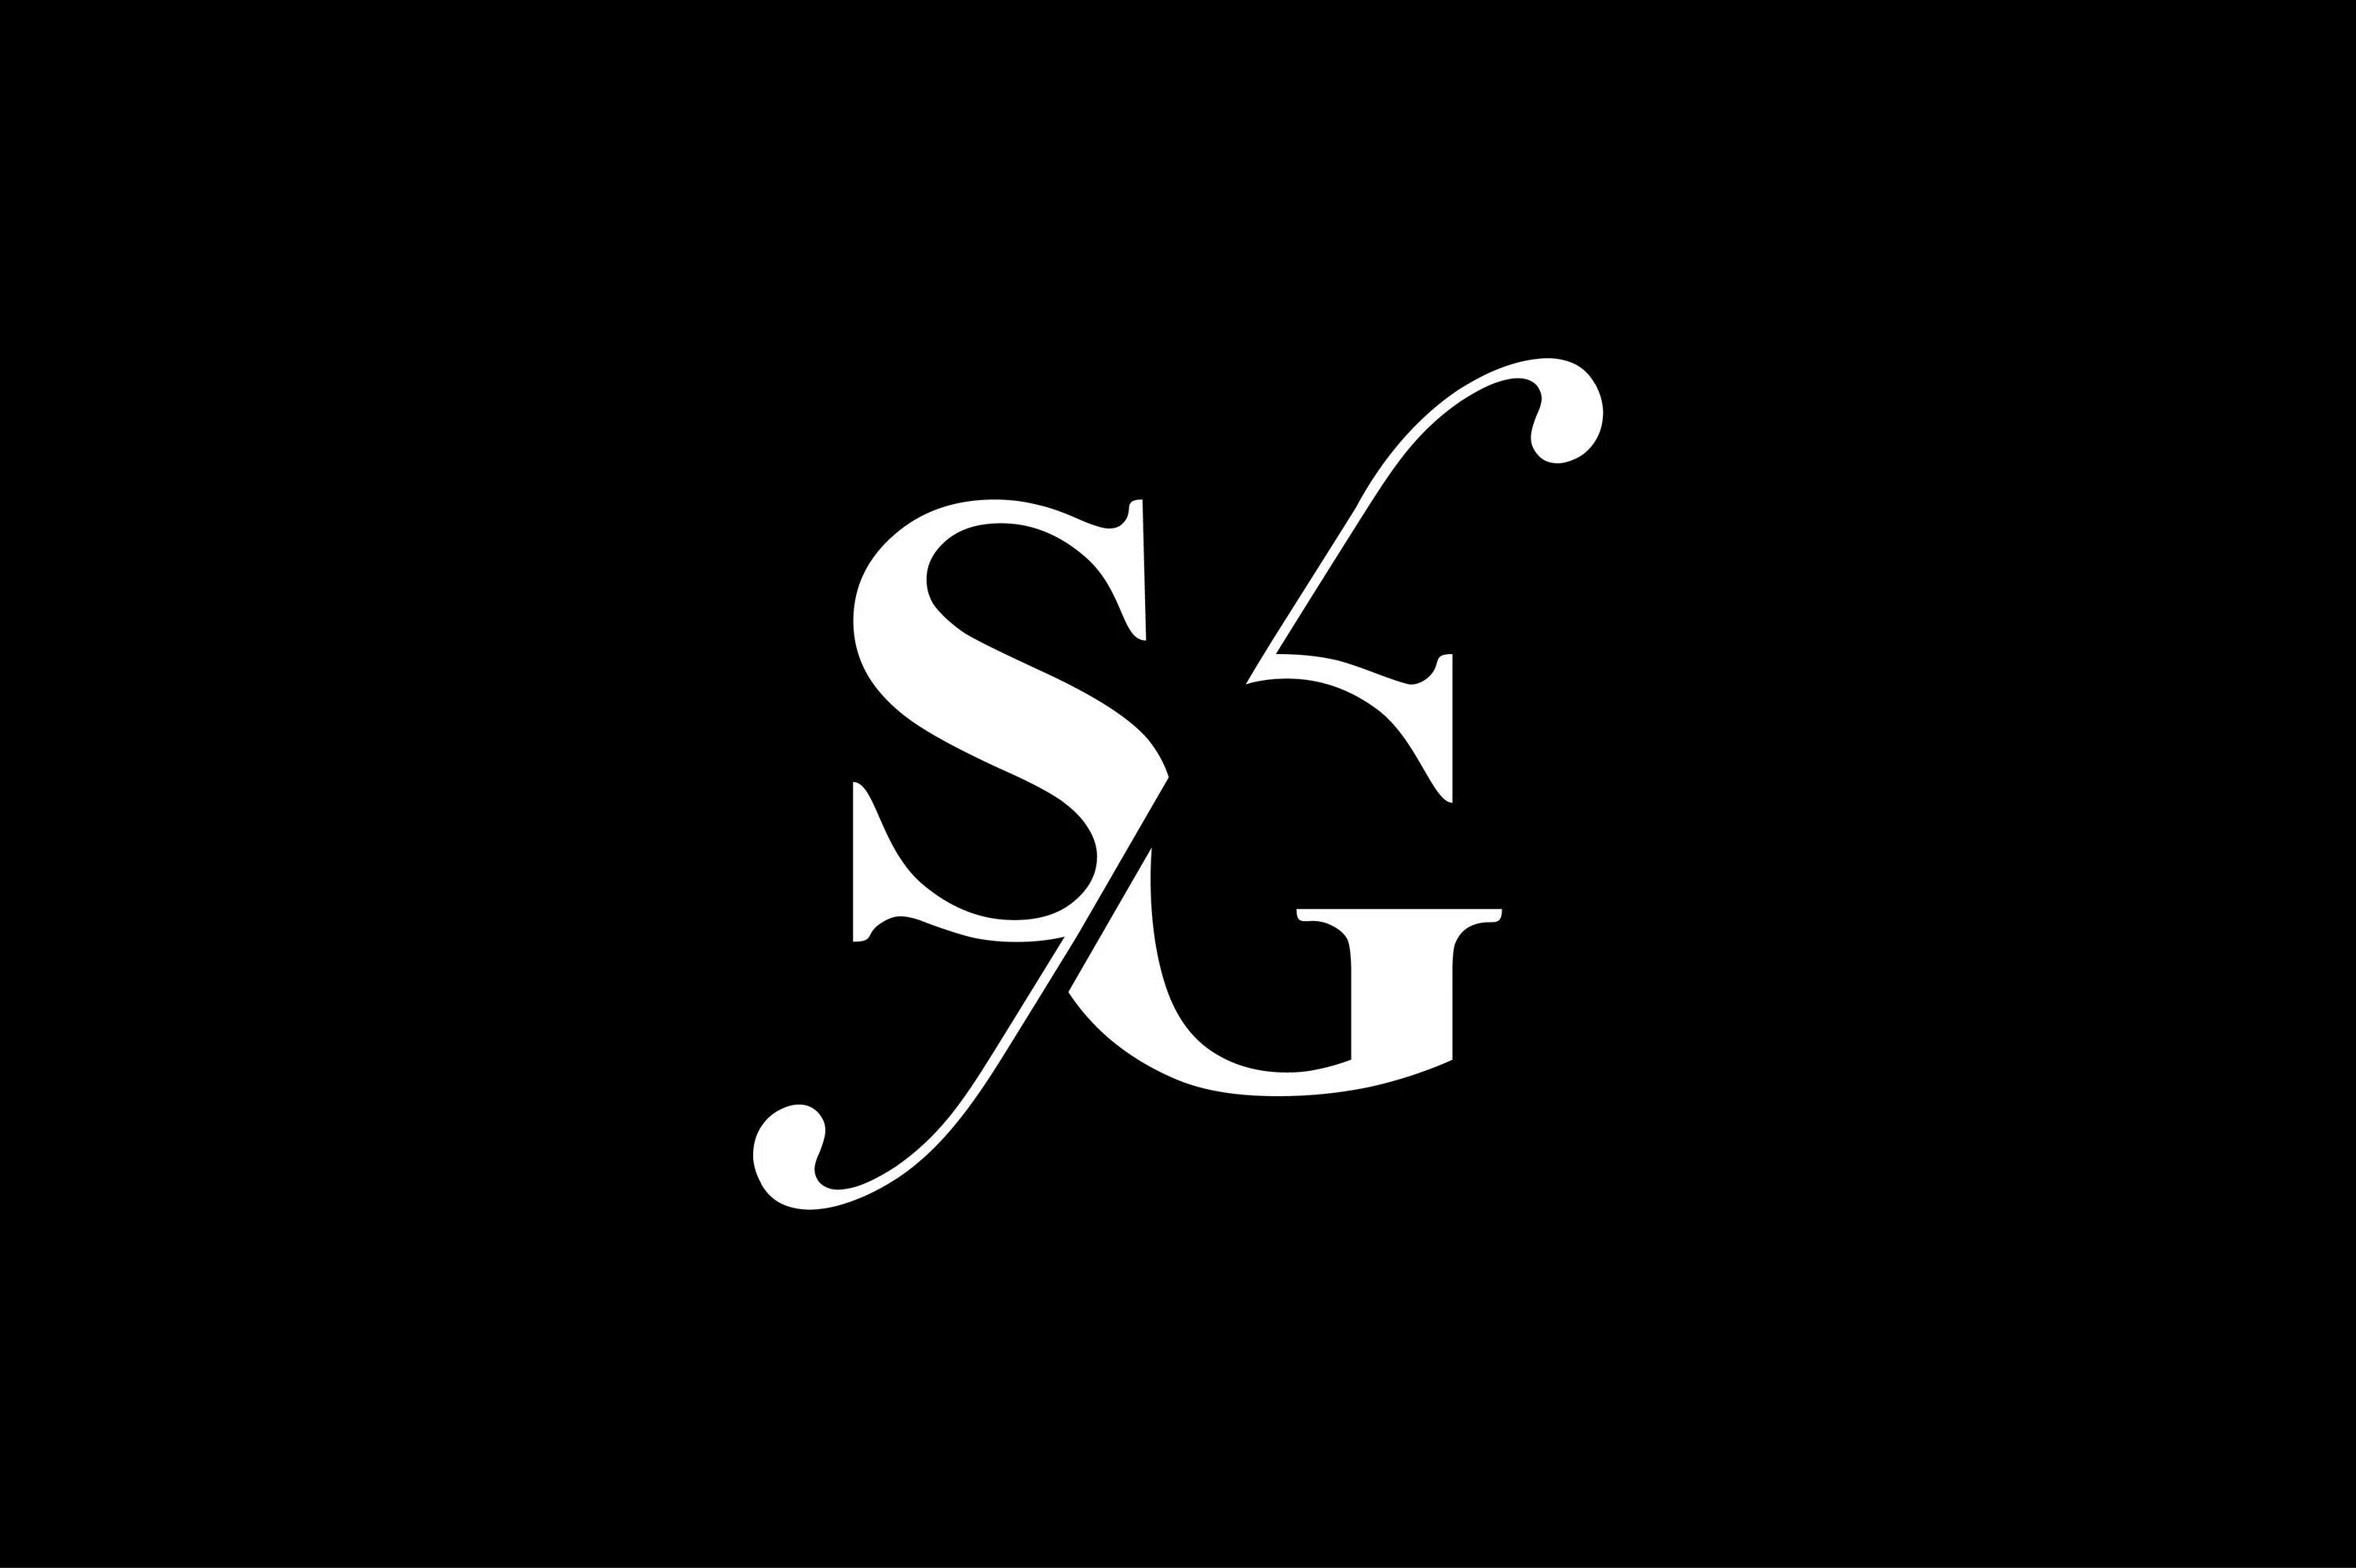 S б g. SG логотип. Картинки SG. Лого с буквами SG. Монограмма g s.